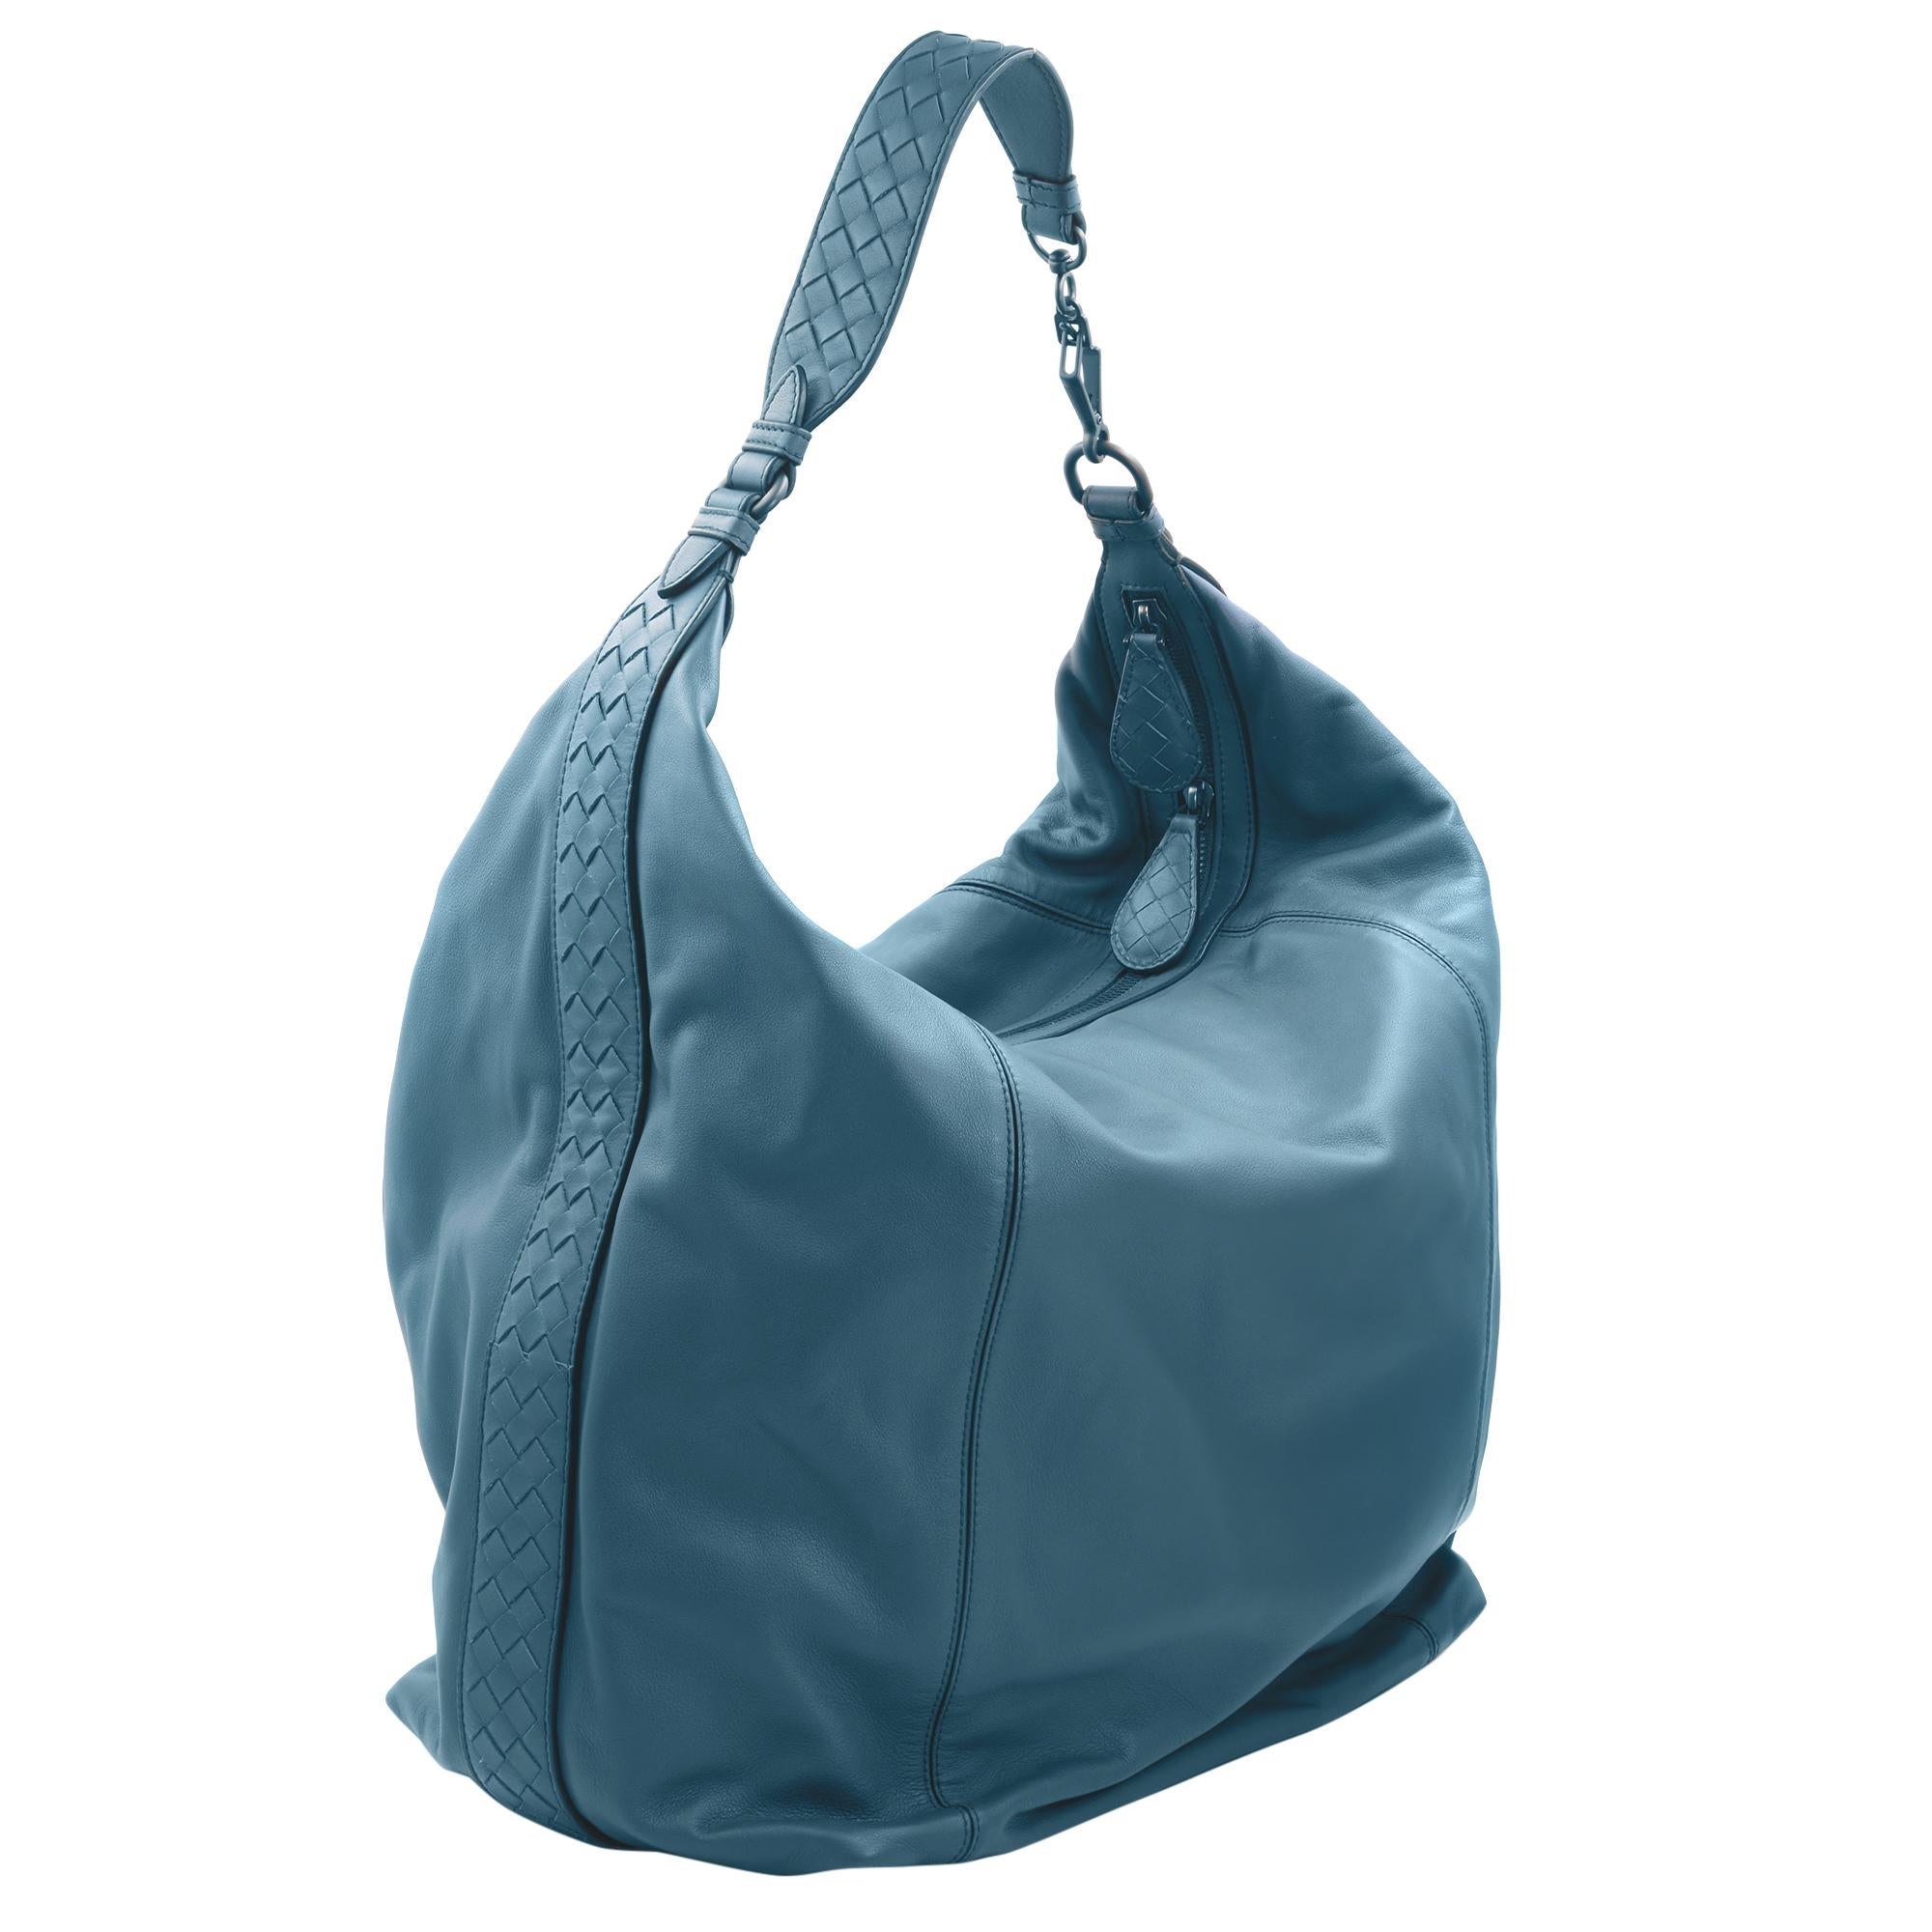 Bleu Bottega Veneta sac hobo porté épaule en cuir bleu pour femmes en vente